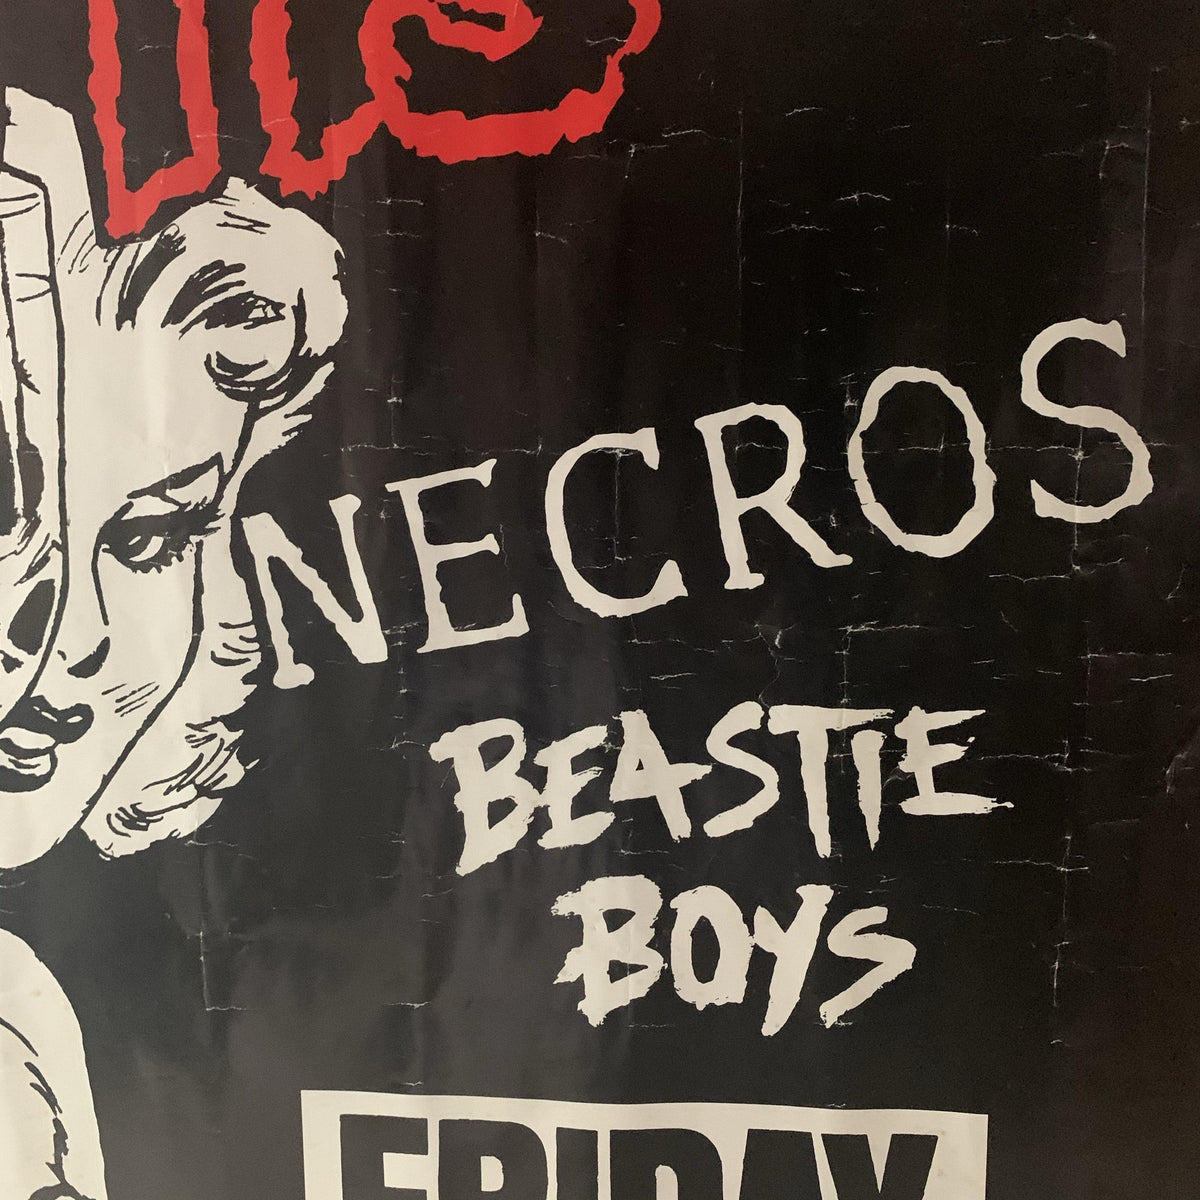 Vintage original Misfits Poster Necros Beastie Boys Irving Plaza Show detail